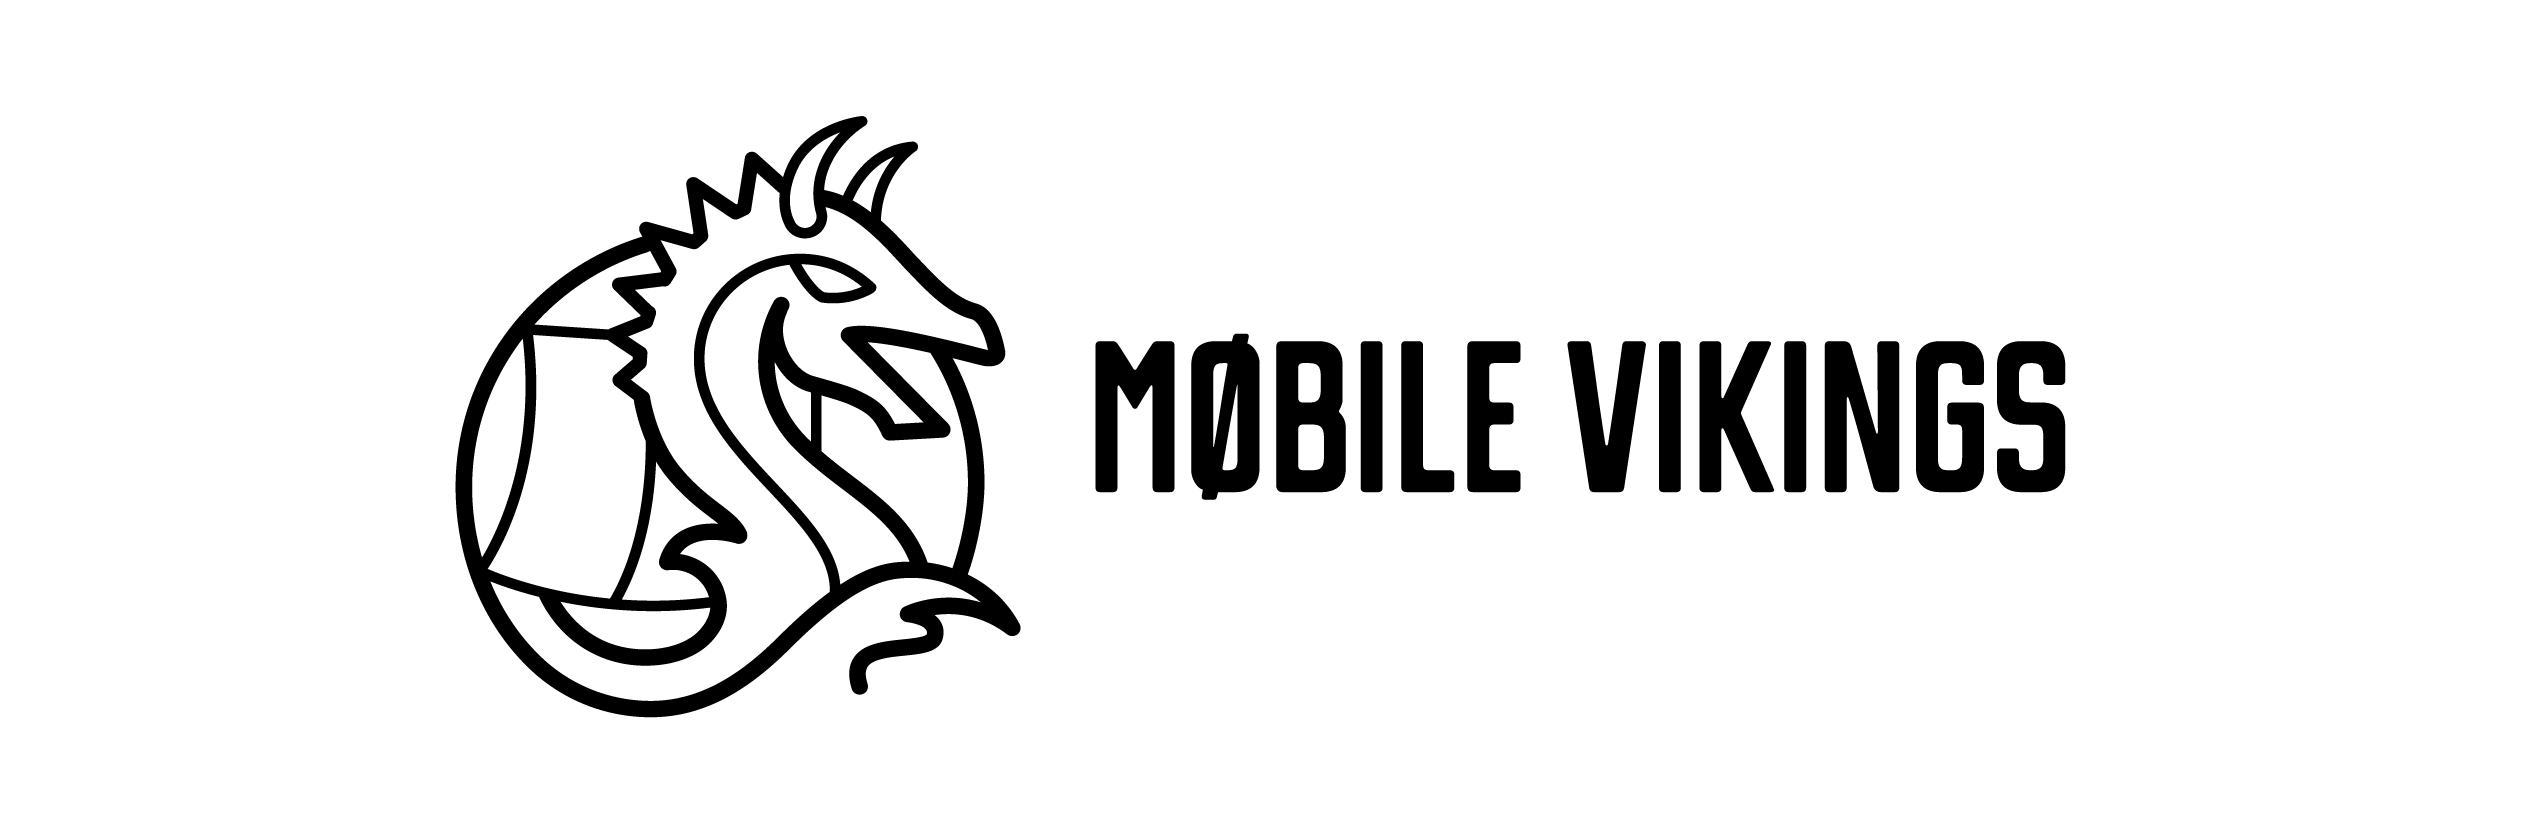 Mobile vikings logo